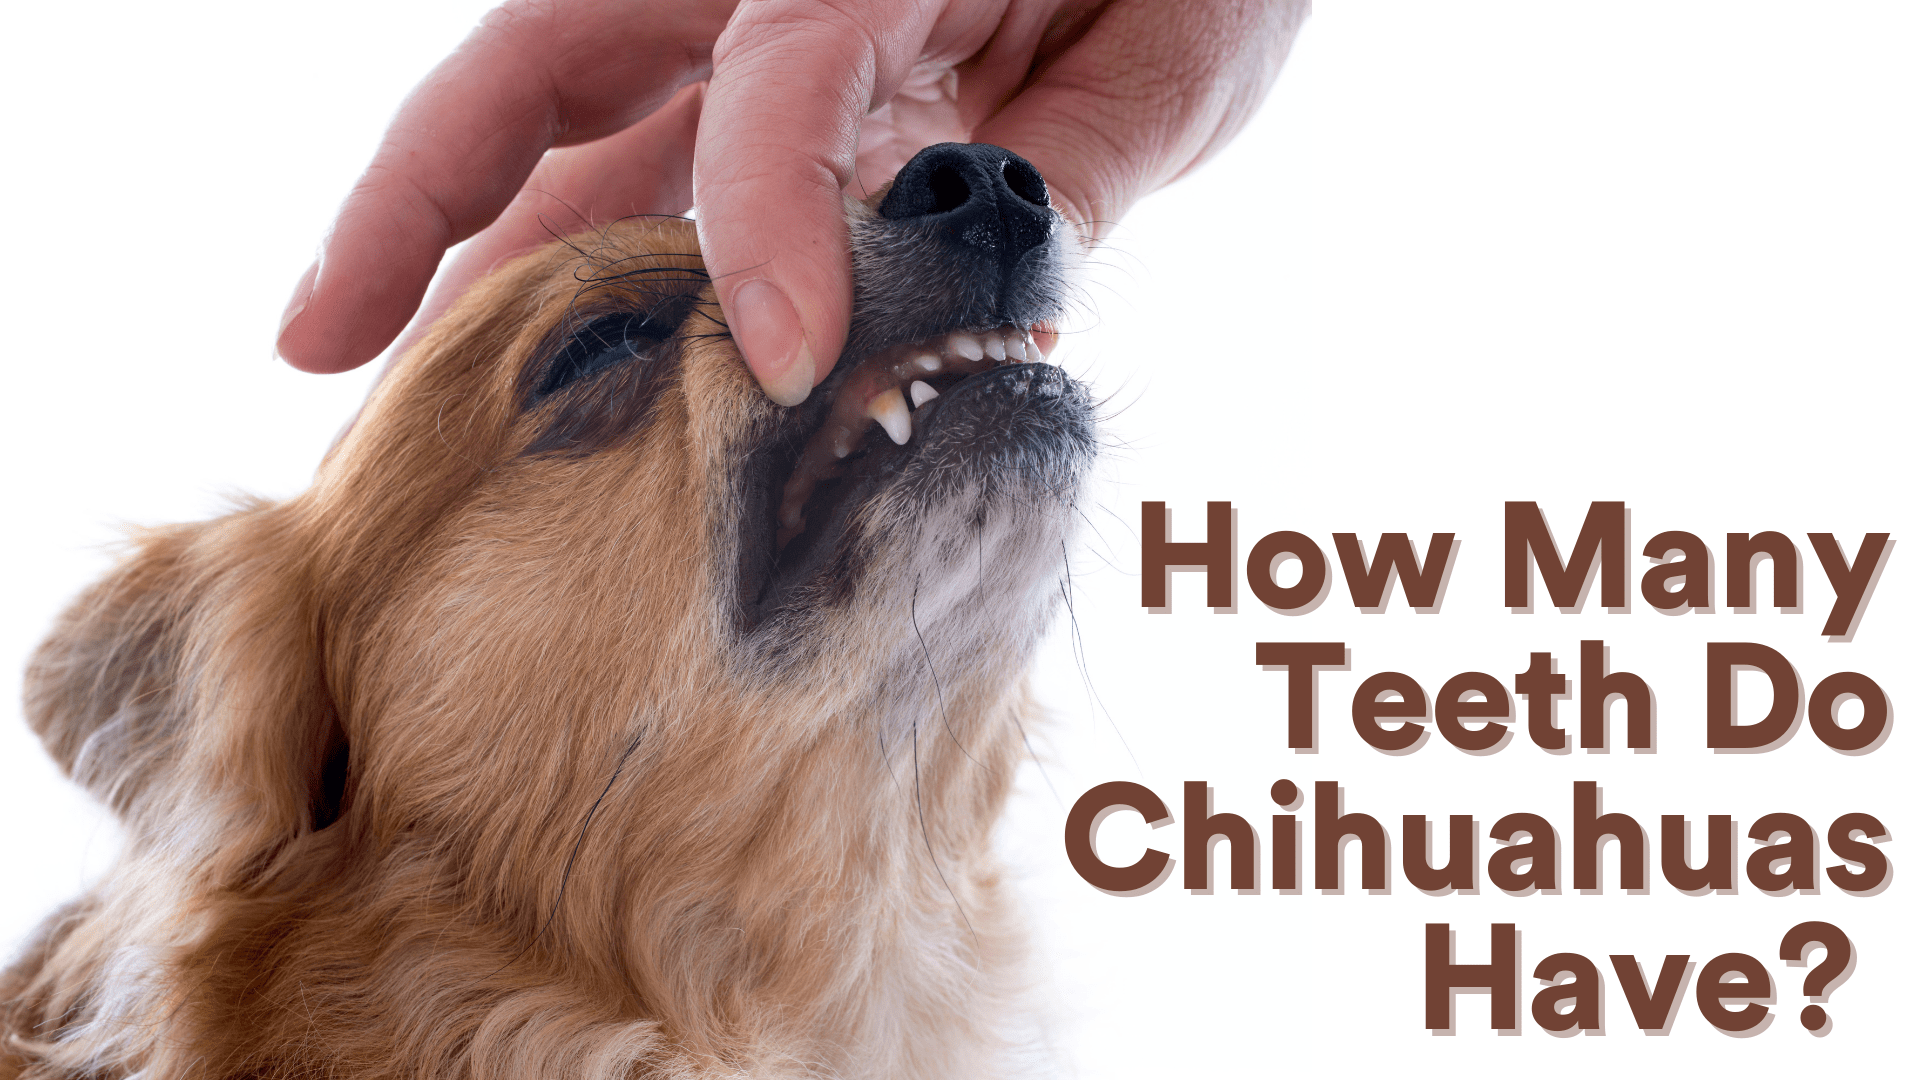 How Many Teeth Do Chihuahuas Have?